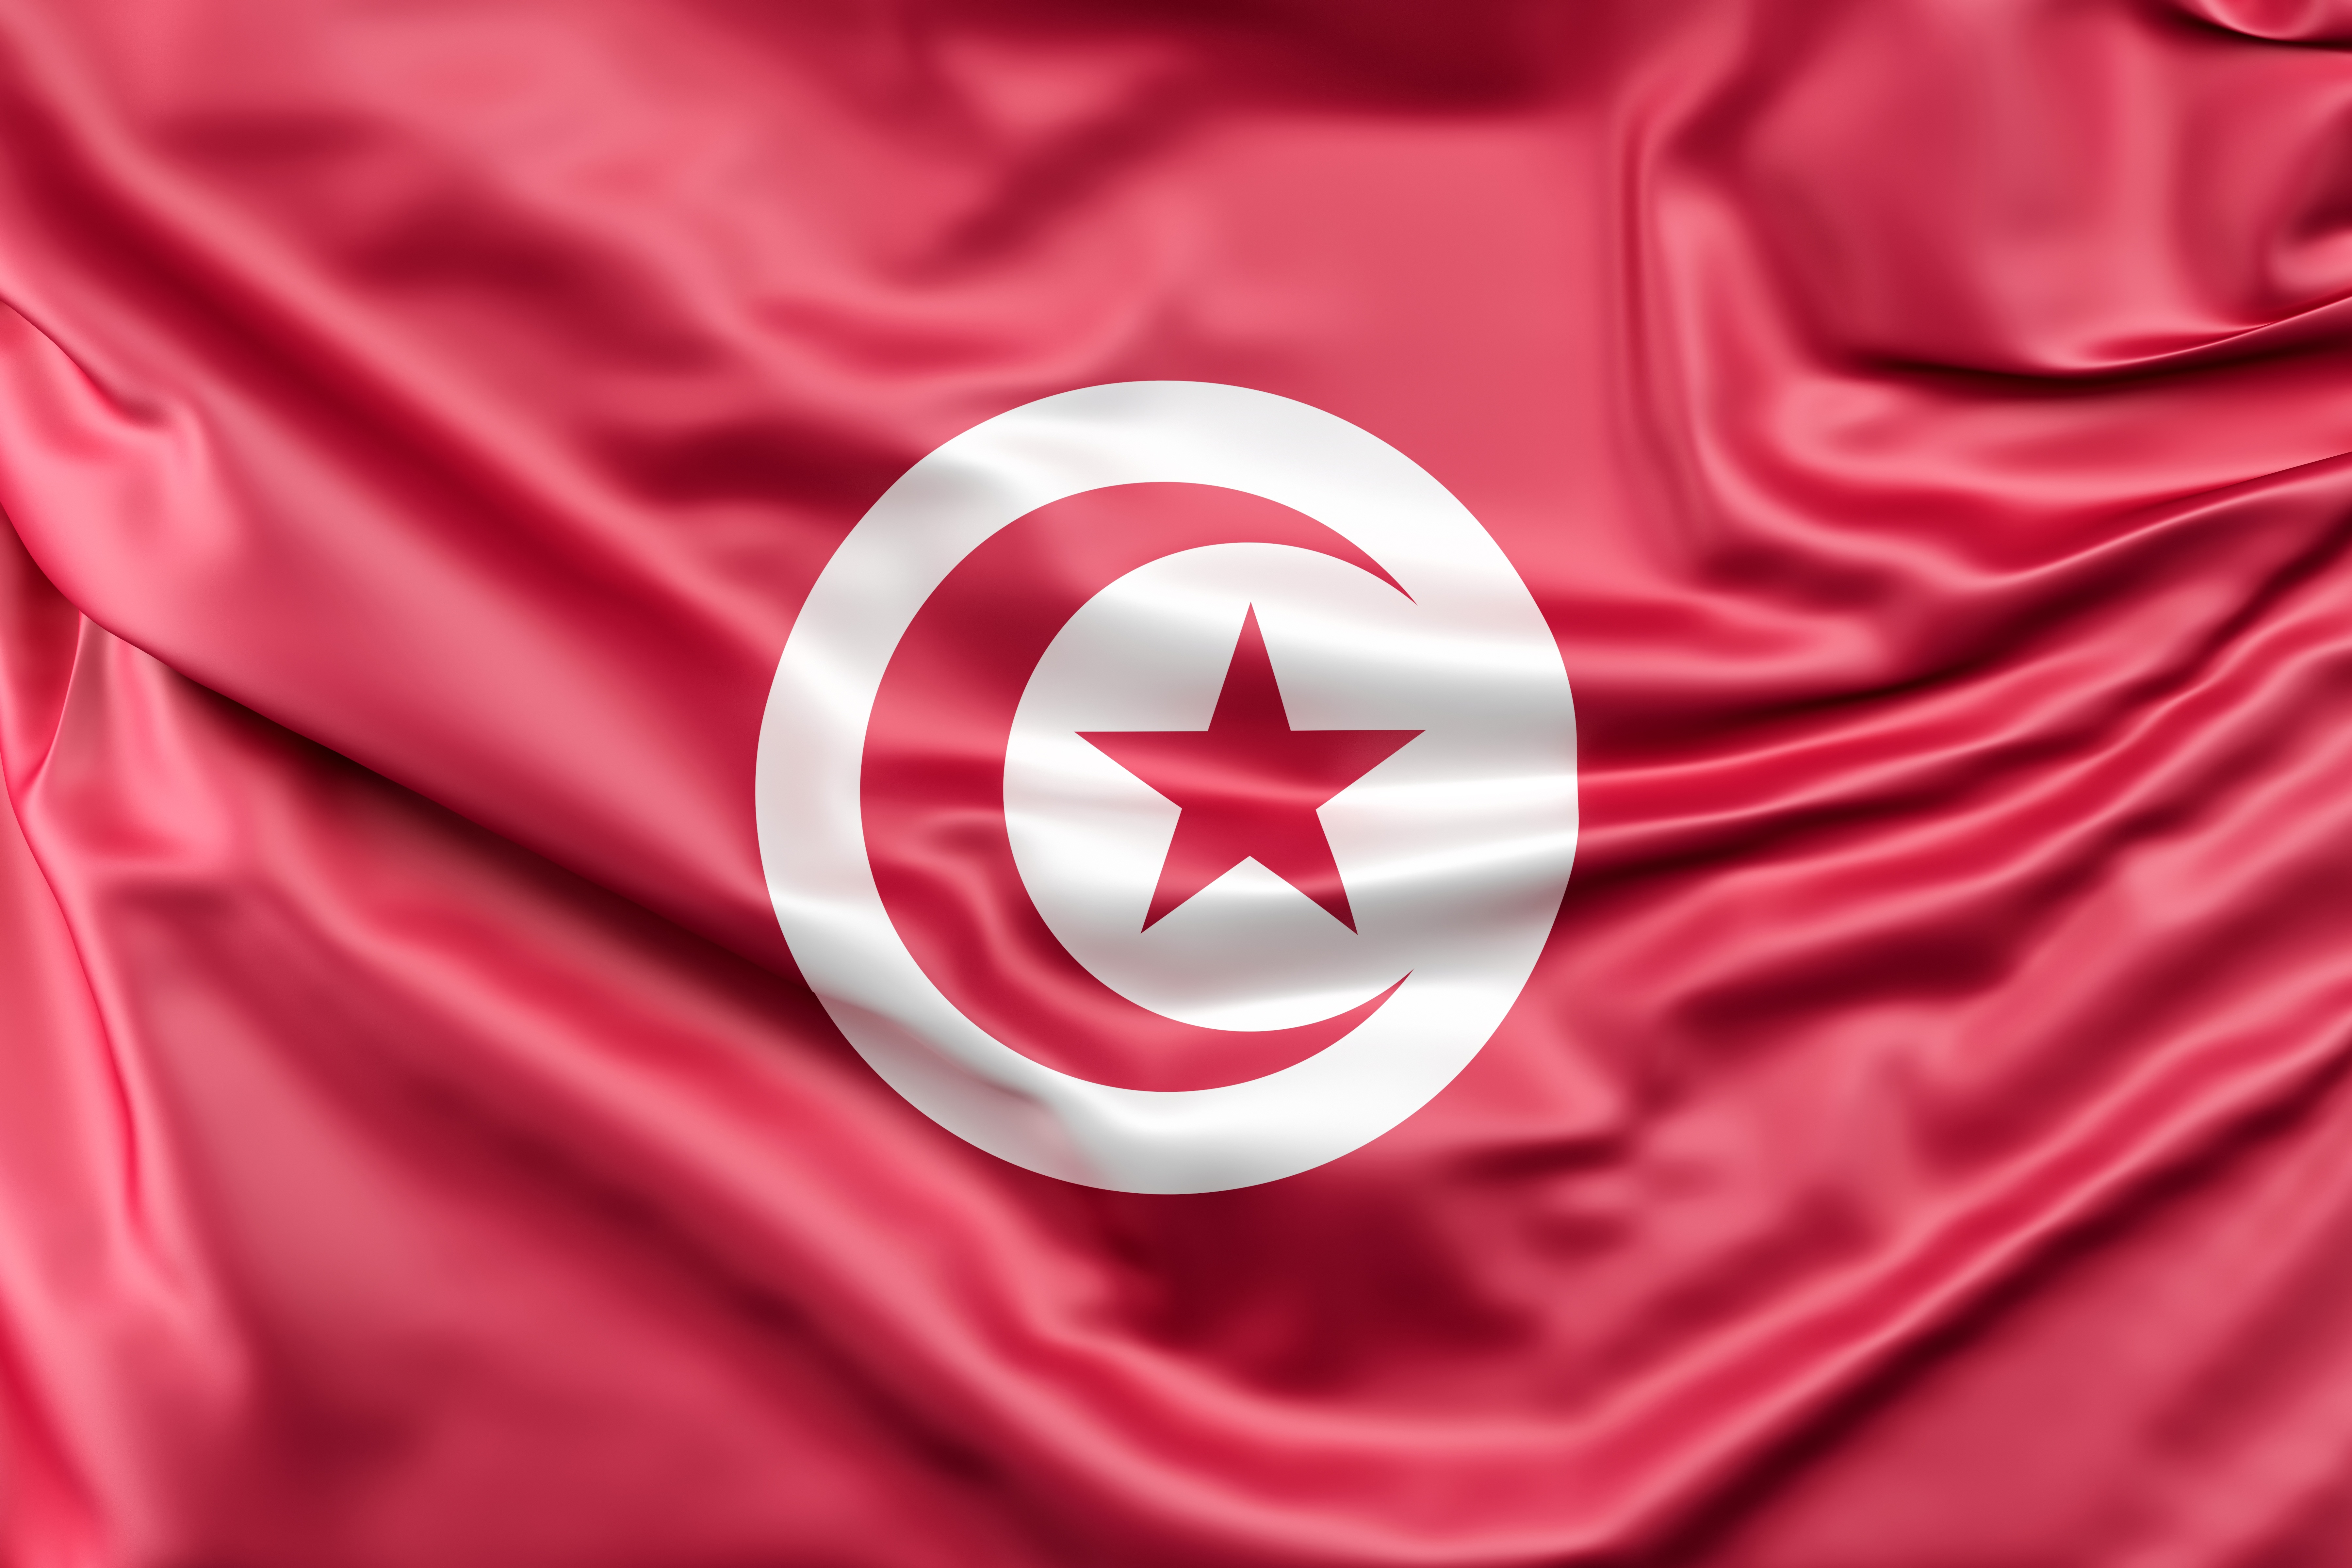 флаг туниса и турции фото